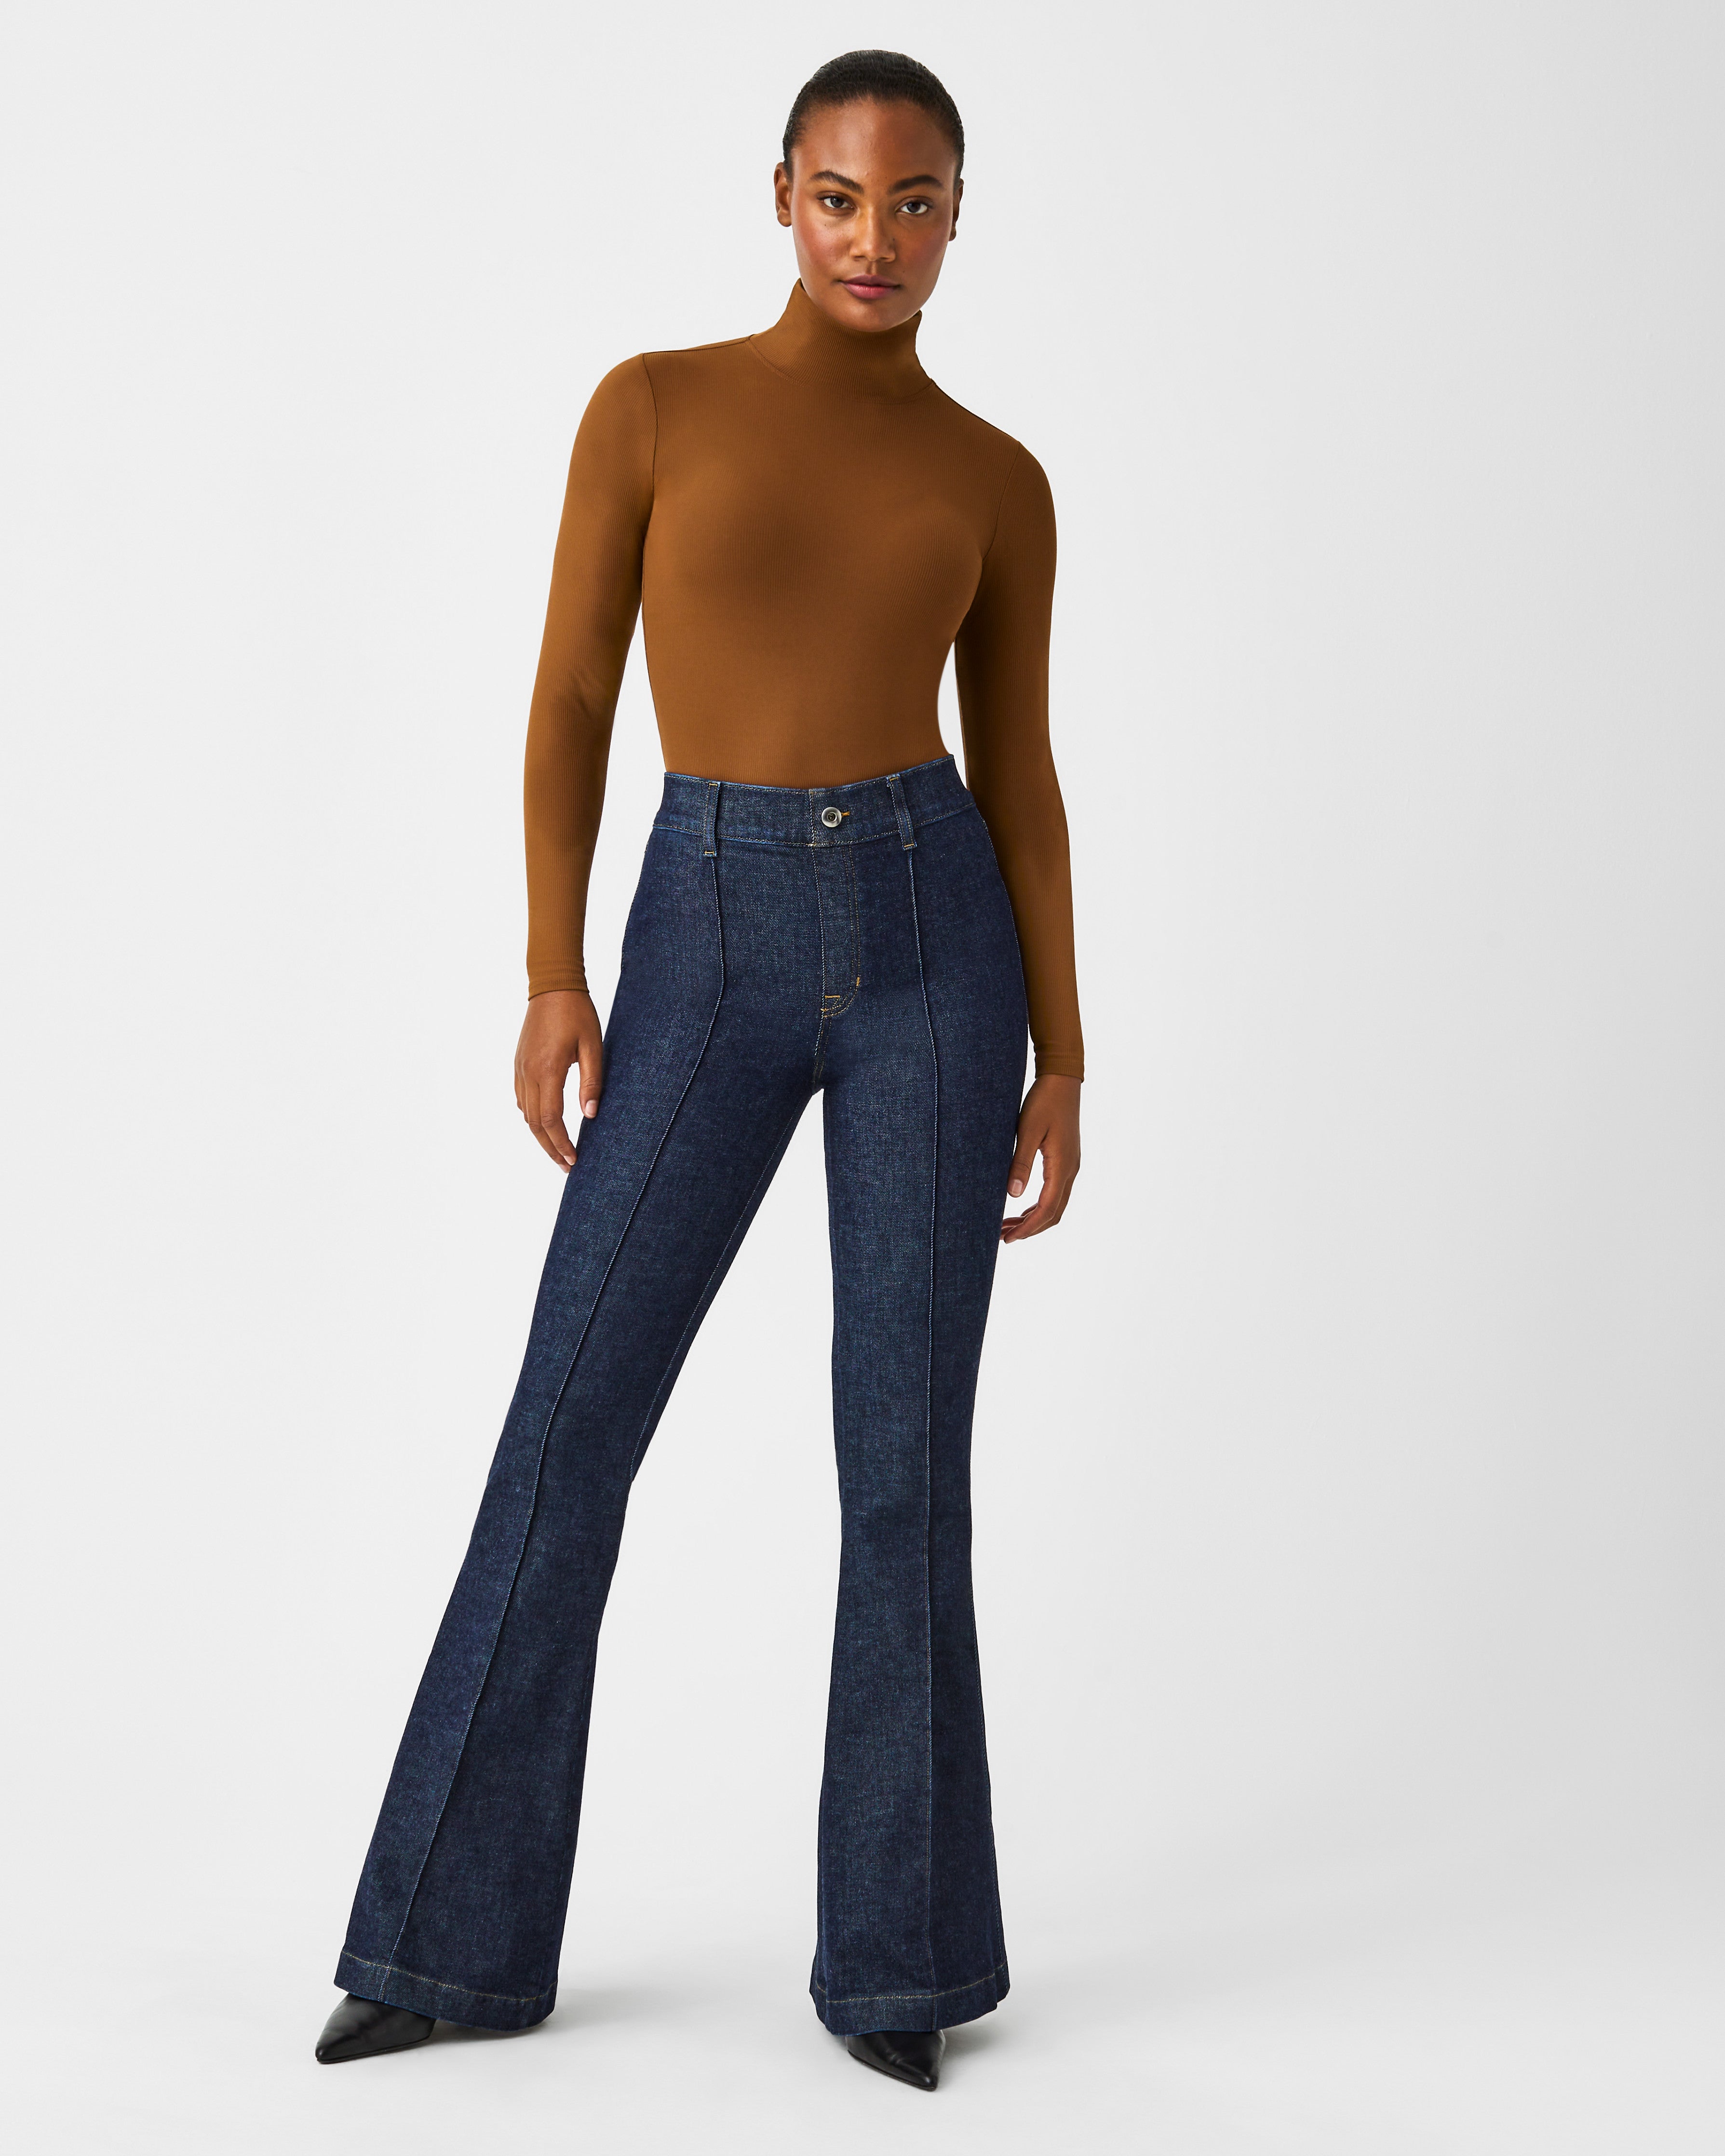 Spanx flare jeans - Petite 29” inseam